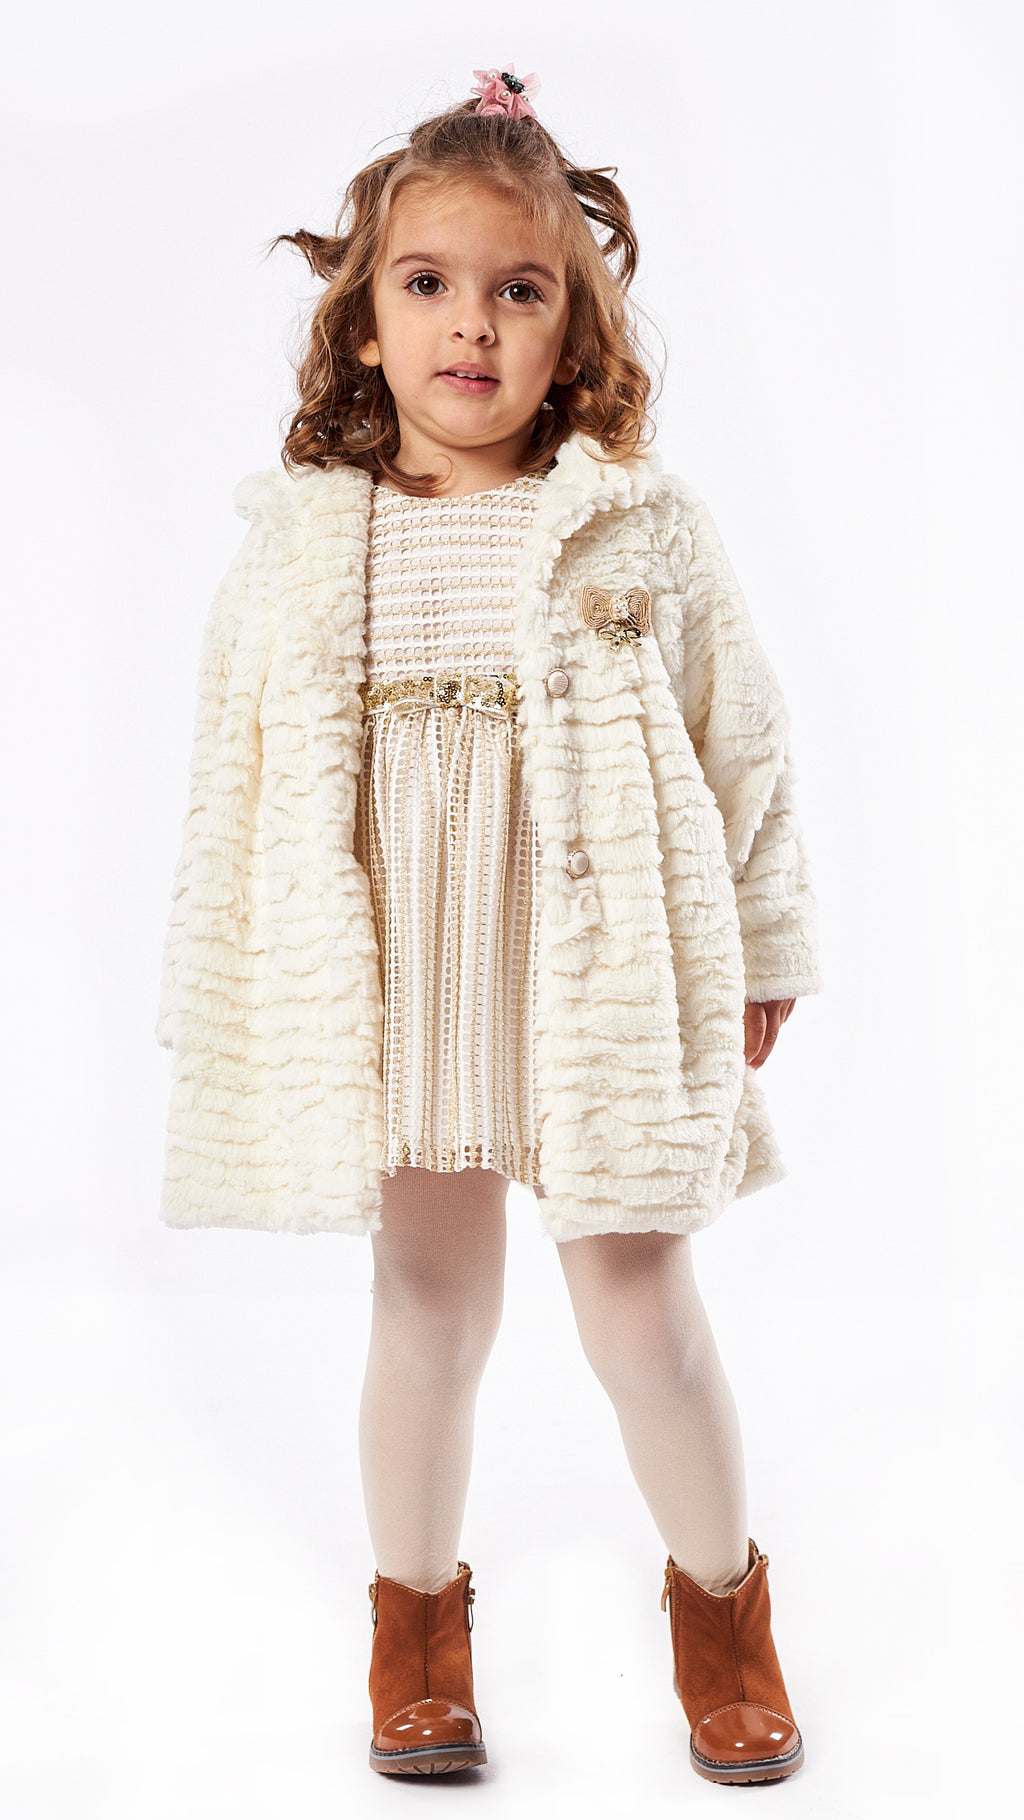 Ebita dress with coat - 227288